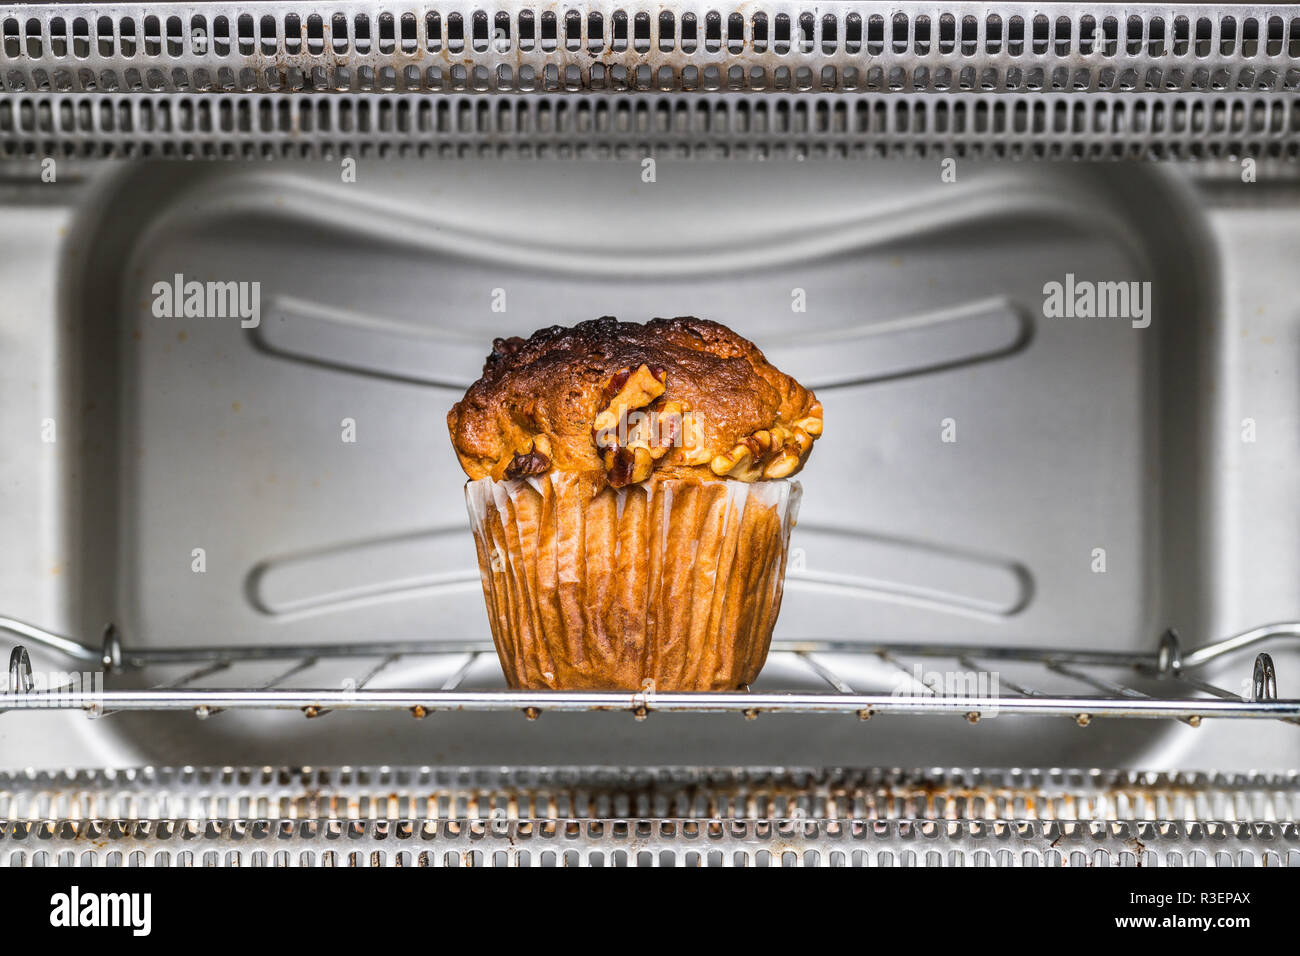 https://c8.alamy.com/comp/R3EPAX/burnt-banana-nut-muffin-in-toaster-oven-R3EPAX.jpg